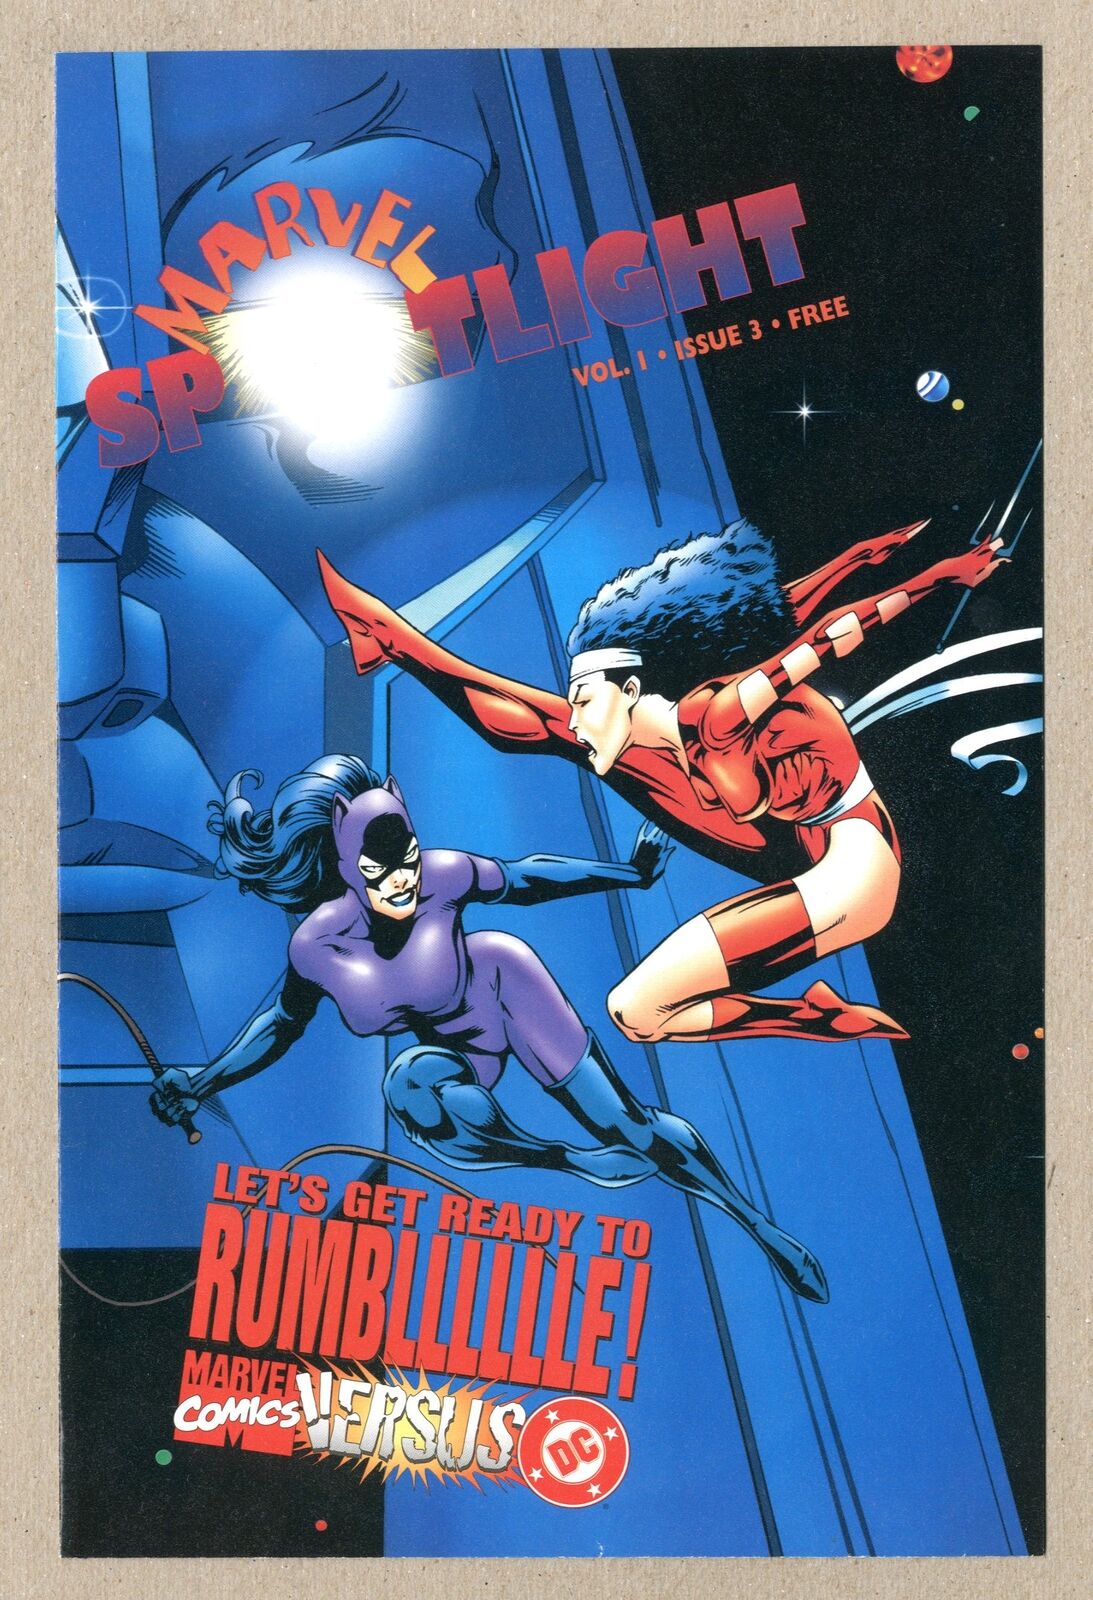 Marvel Spotlight Promo Vol. 1 #3 VF/NM 9.0 1995